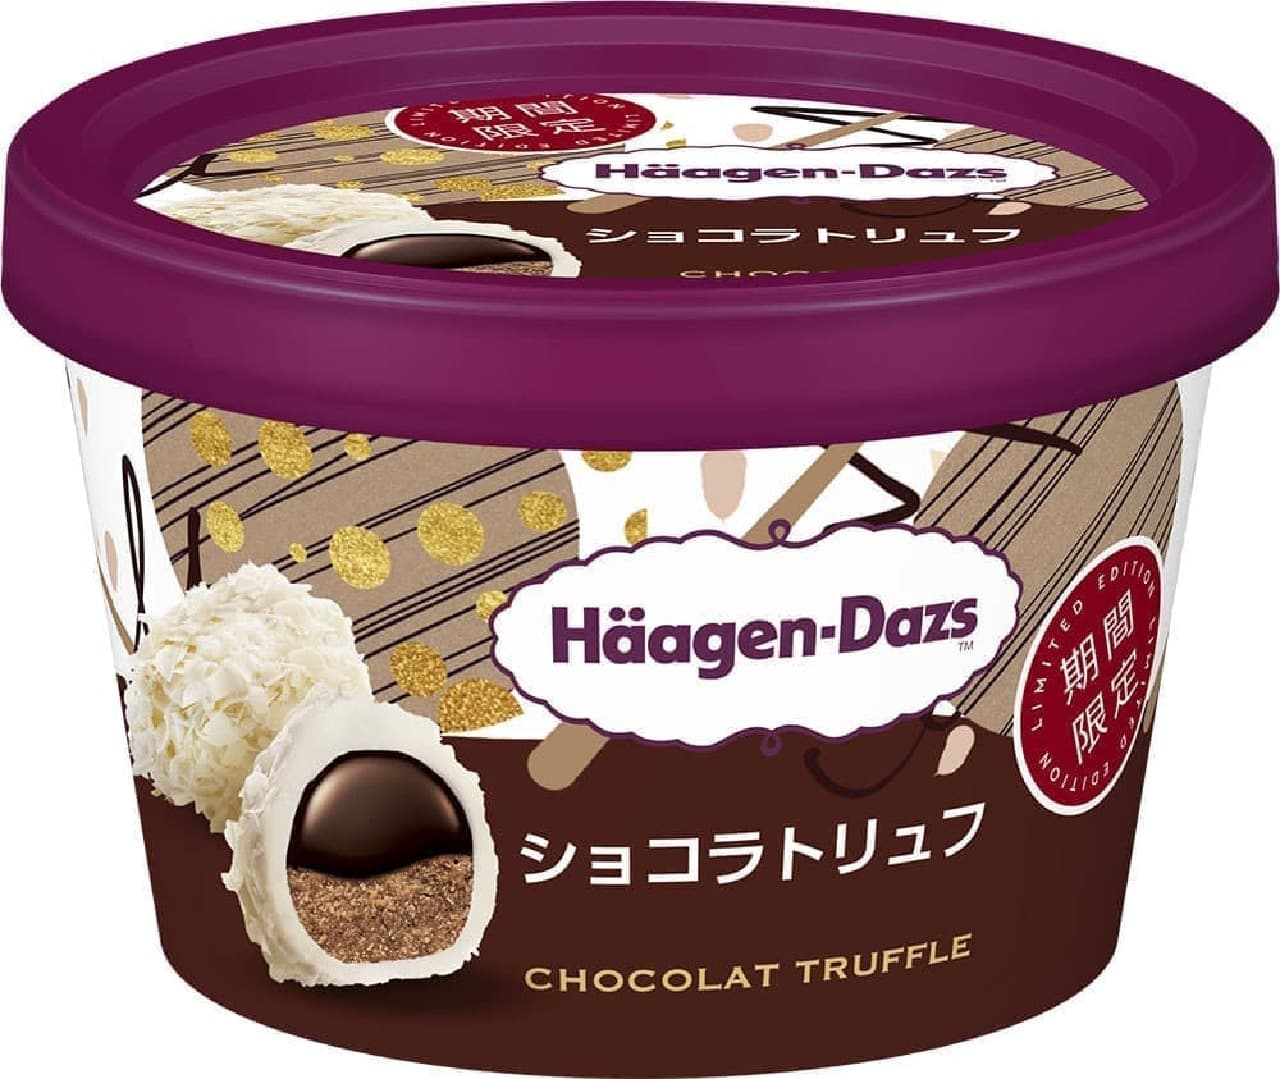 Haagen-Dazs "Chocolat Truffle"